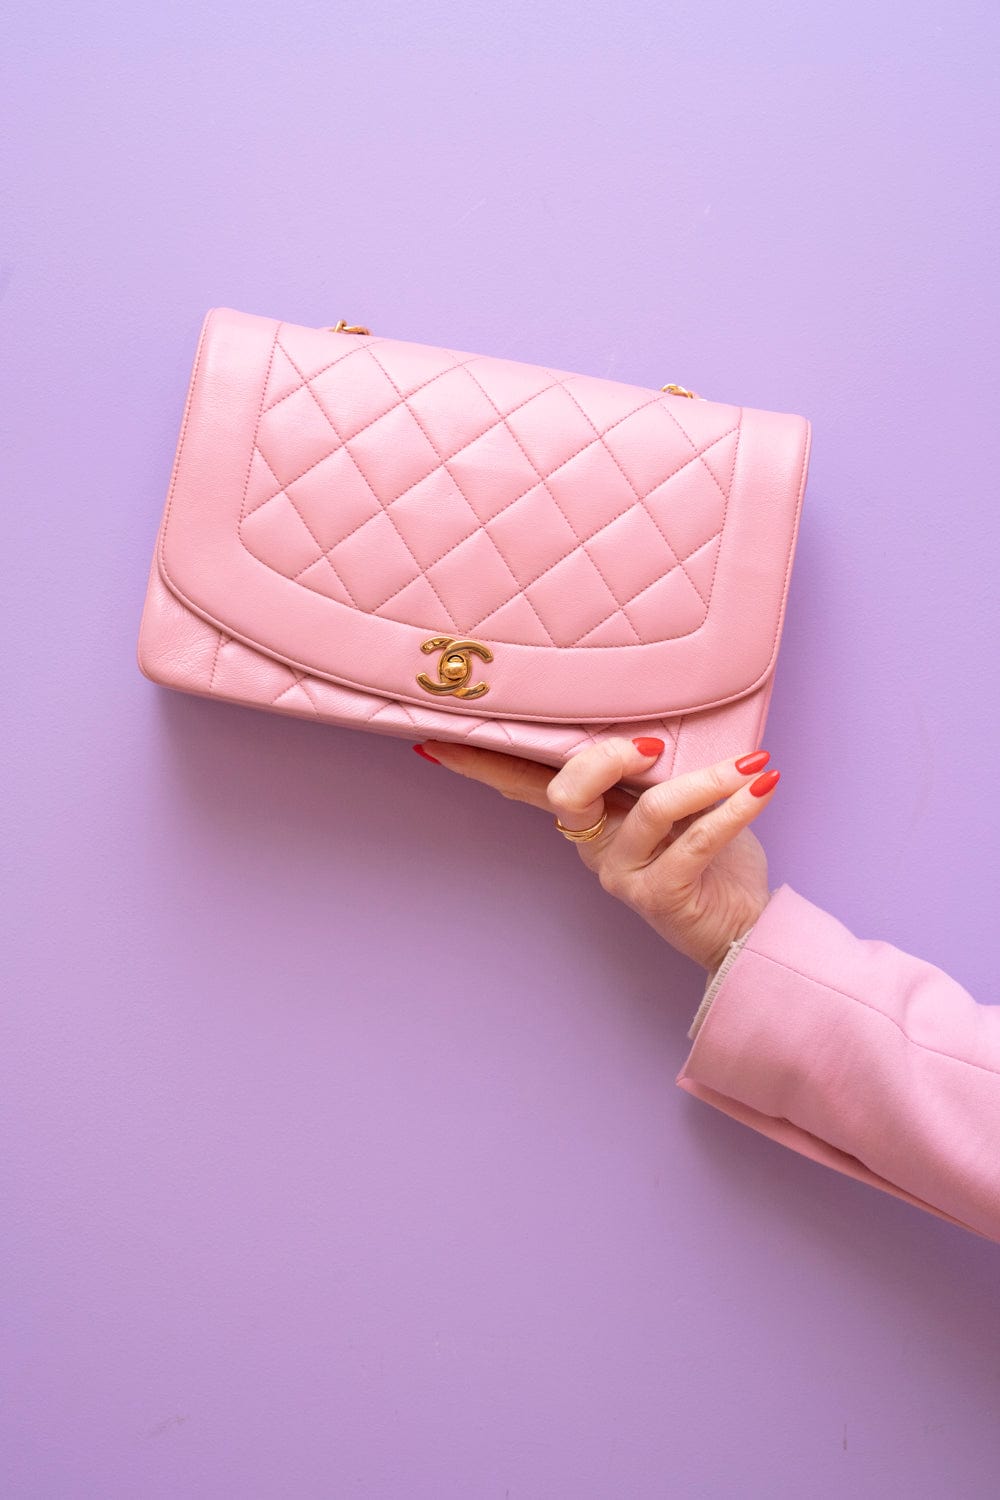 Authentic Chanel Vintage Pink Satin Diana Shoulder Bag With 